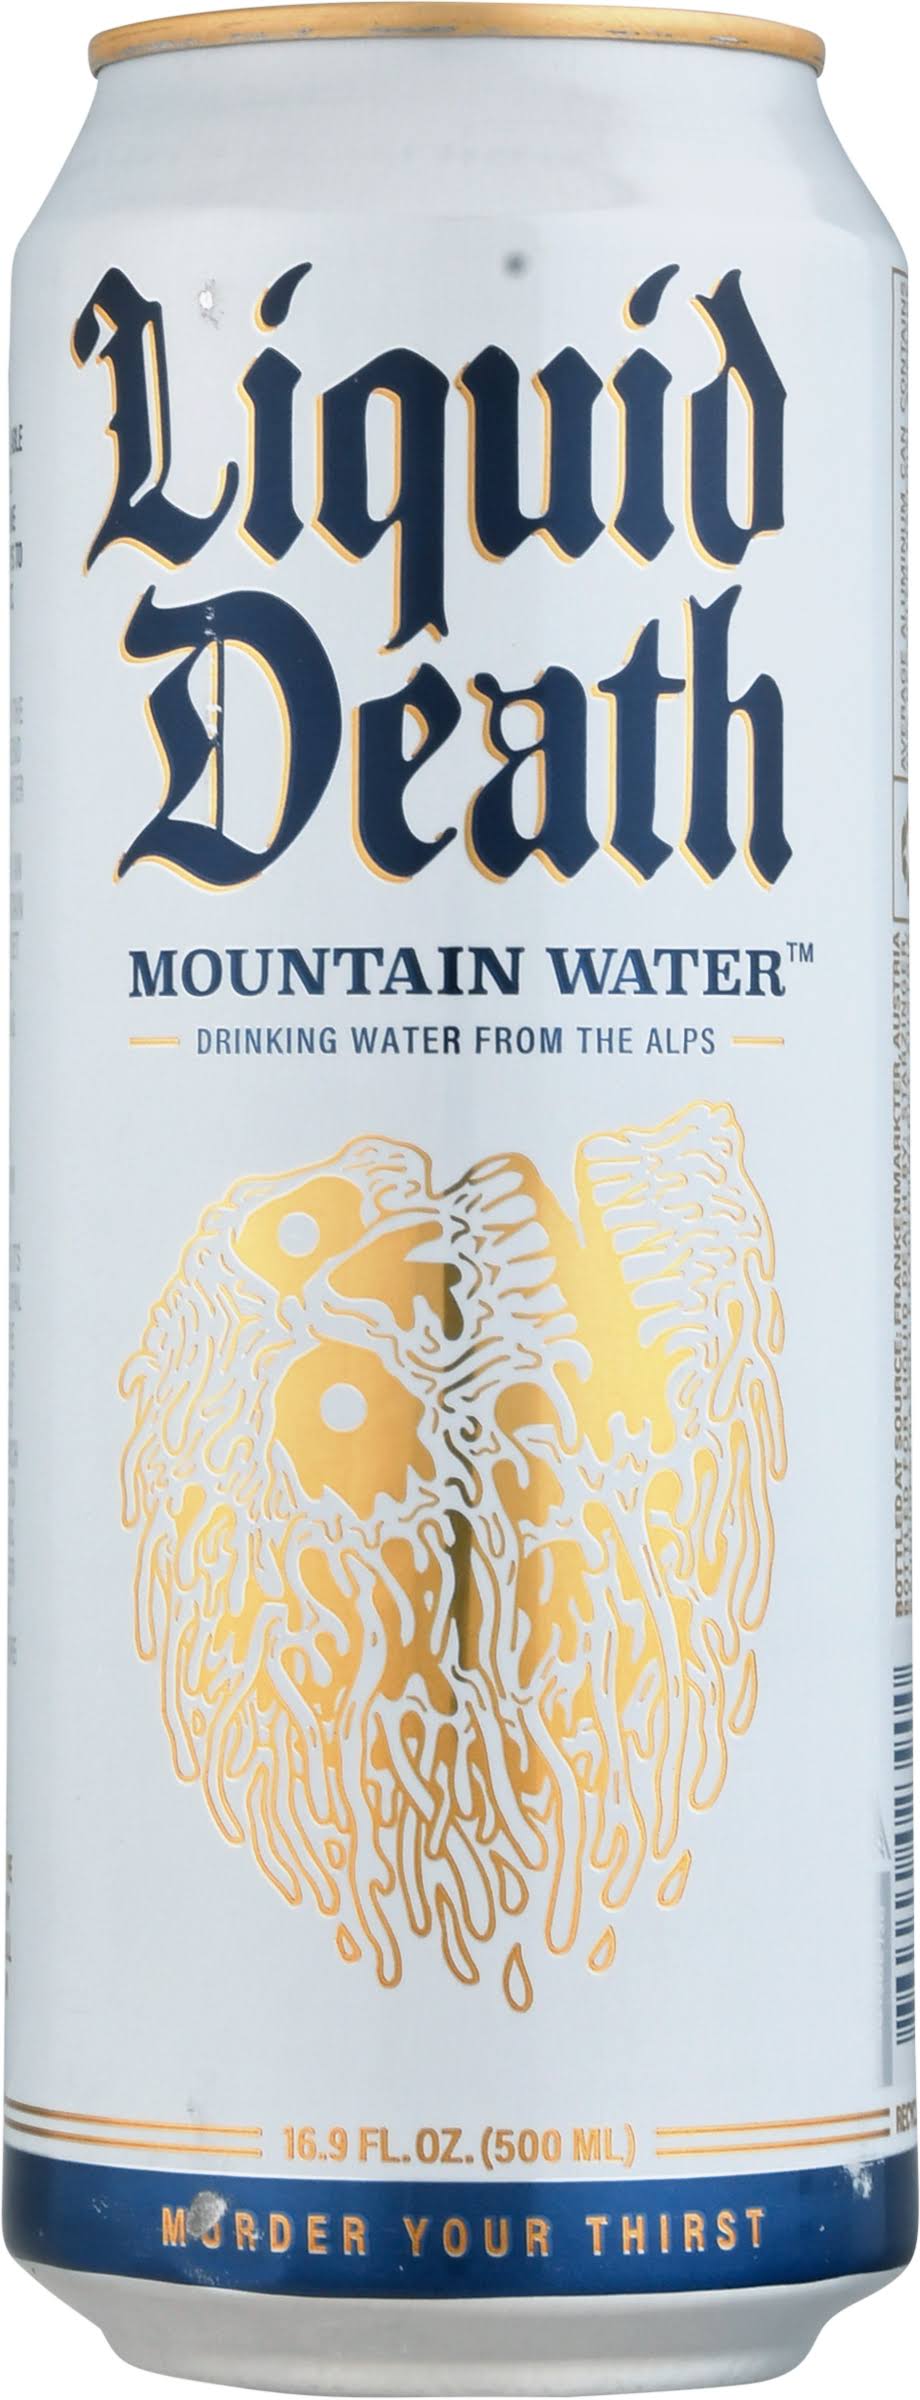 Liquid Death Canned Austrian Alps Mountain Water - 16.9oz